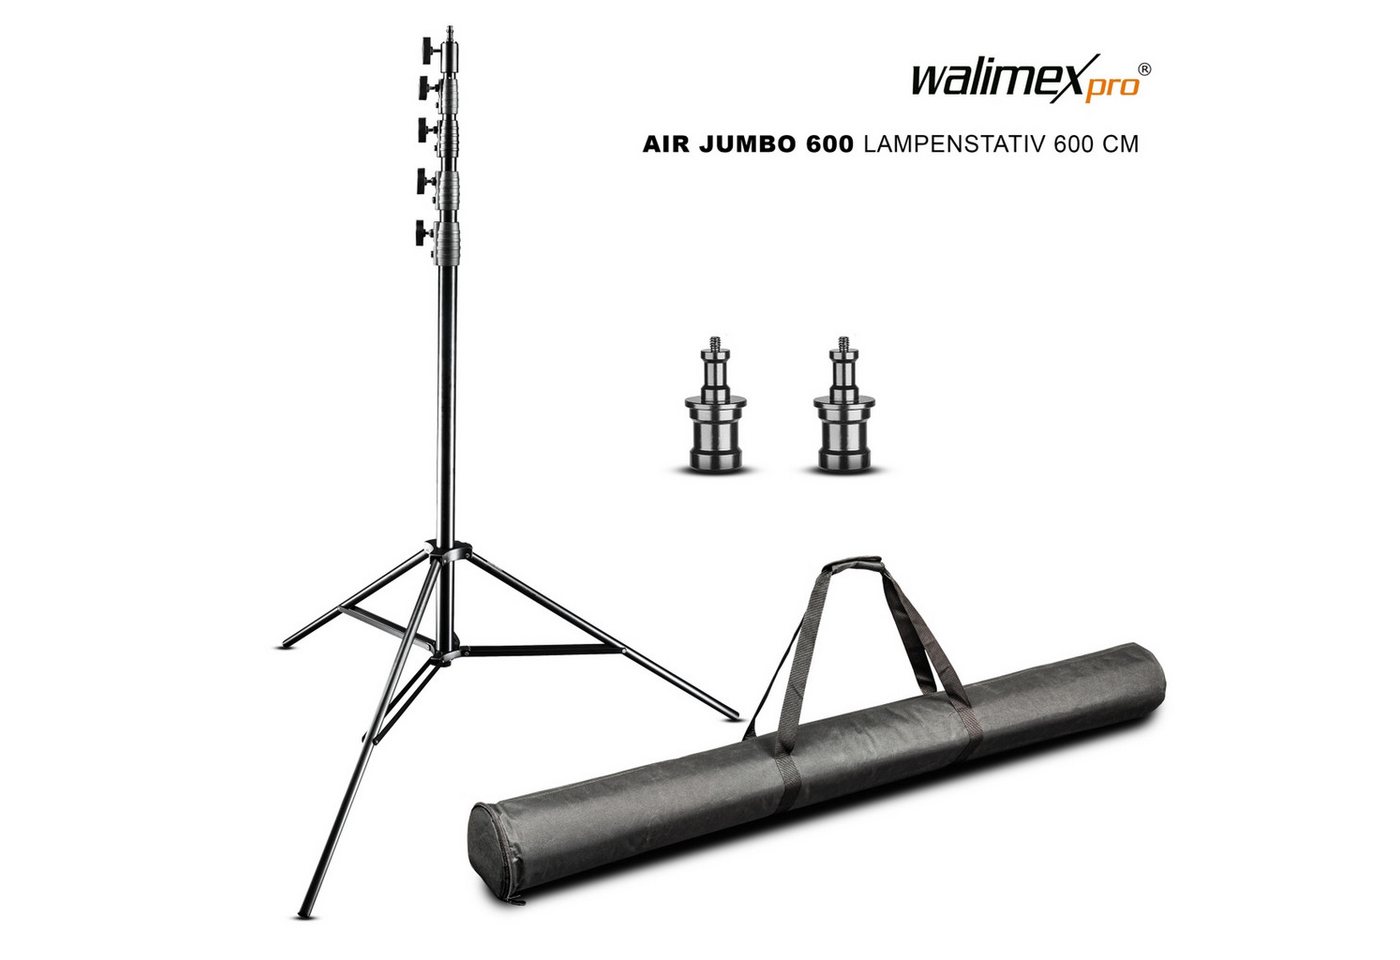 Walimex Pro Jumbo AIR 600 Lampenstativ 600 cm Lampenstativ von Walimex Pro